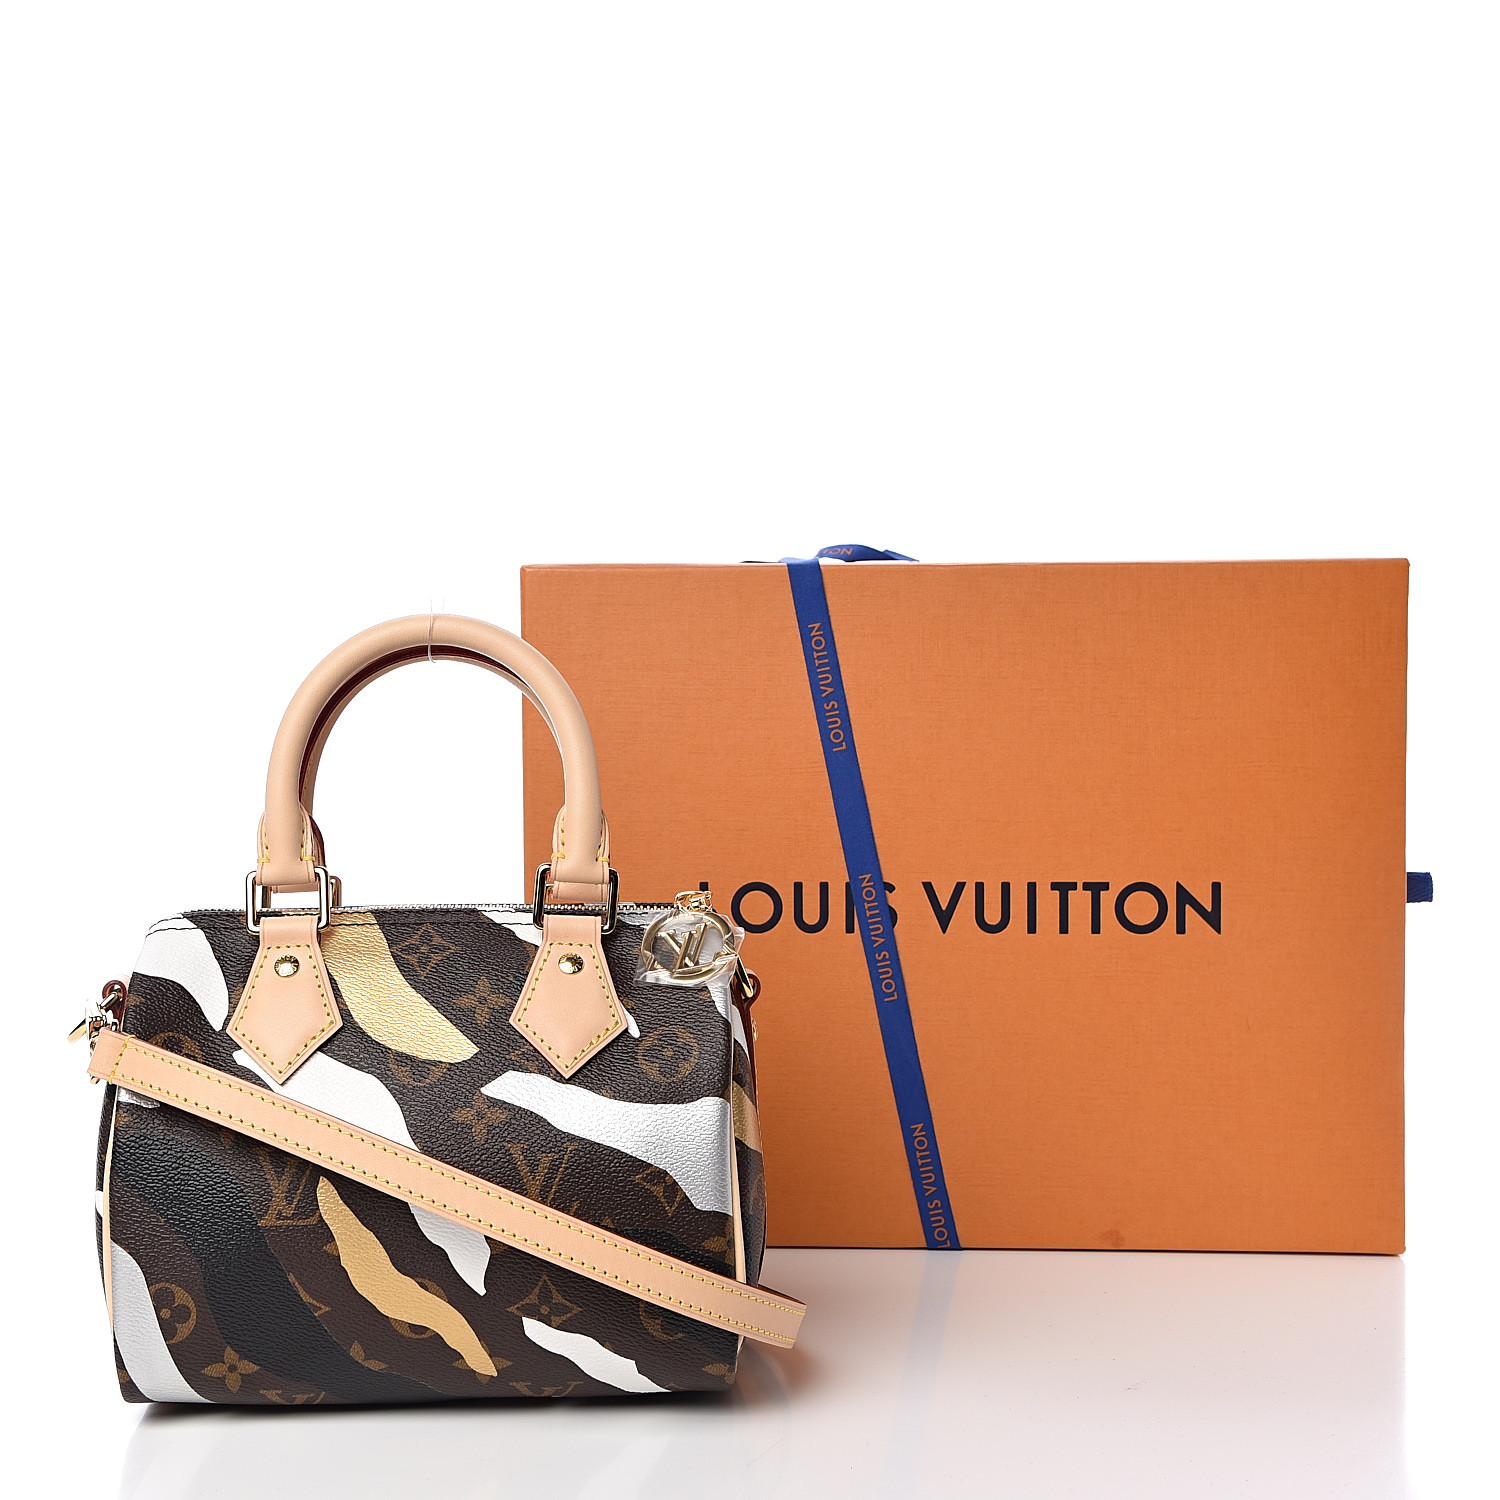 Louis Vuitton, Bags, Louis Vuitton Speedy Bb Lv Ink Lambskin Noir Bag